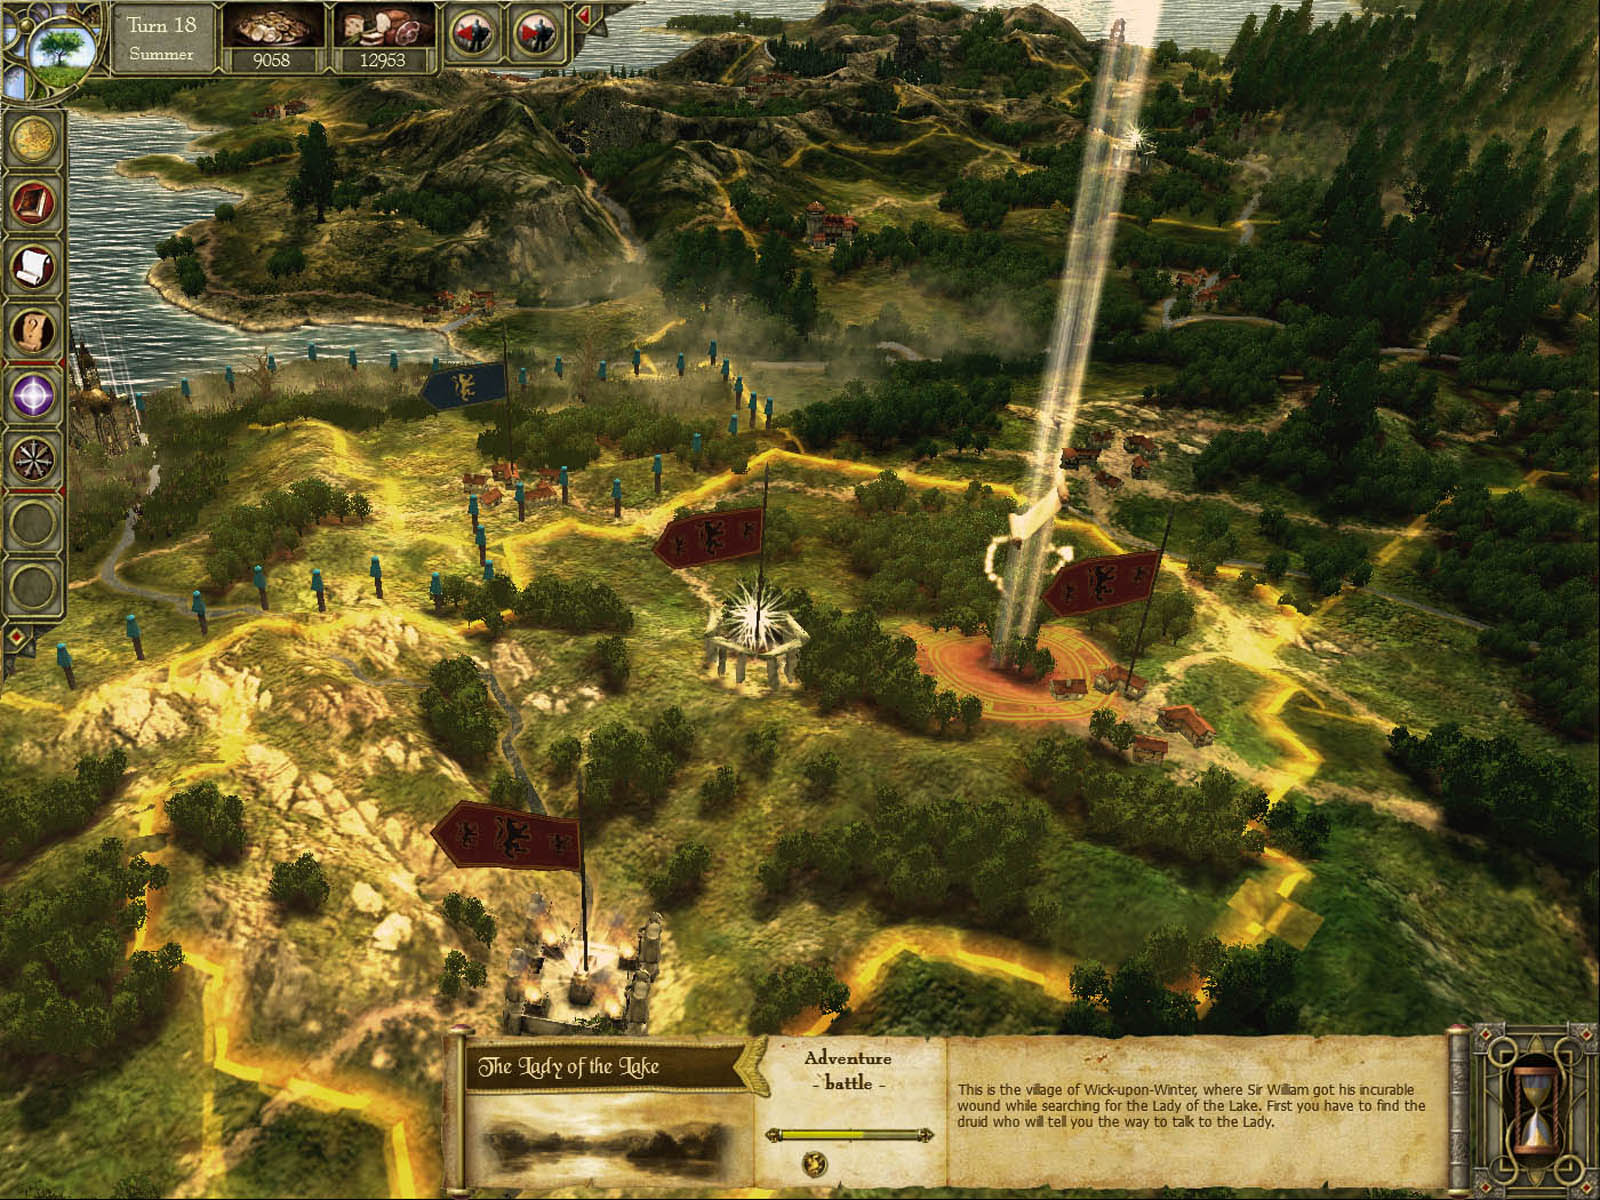 King Arthur - The Role-playing Wargame screenshot